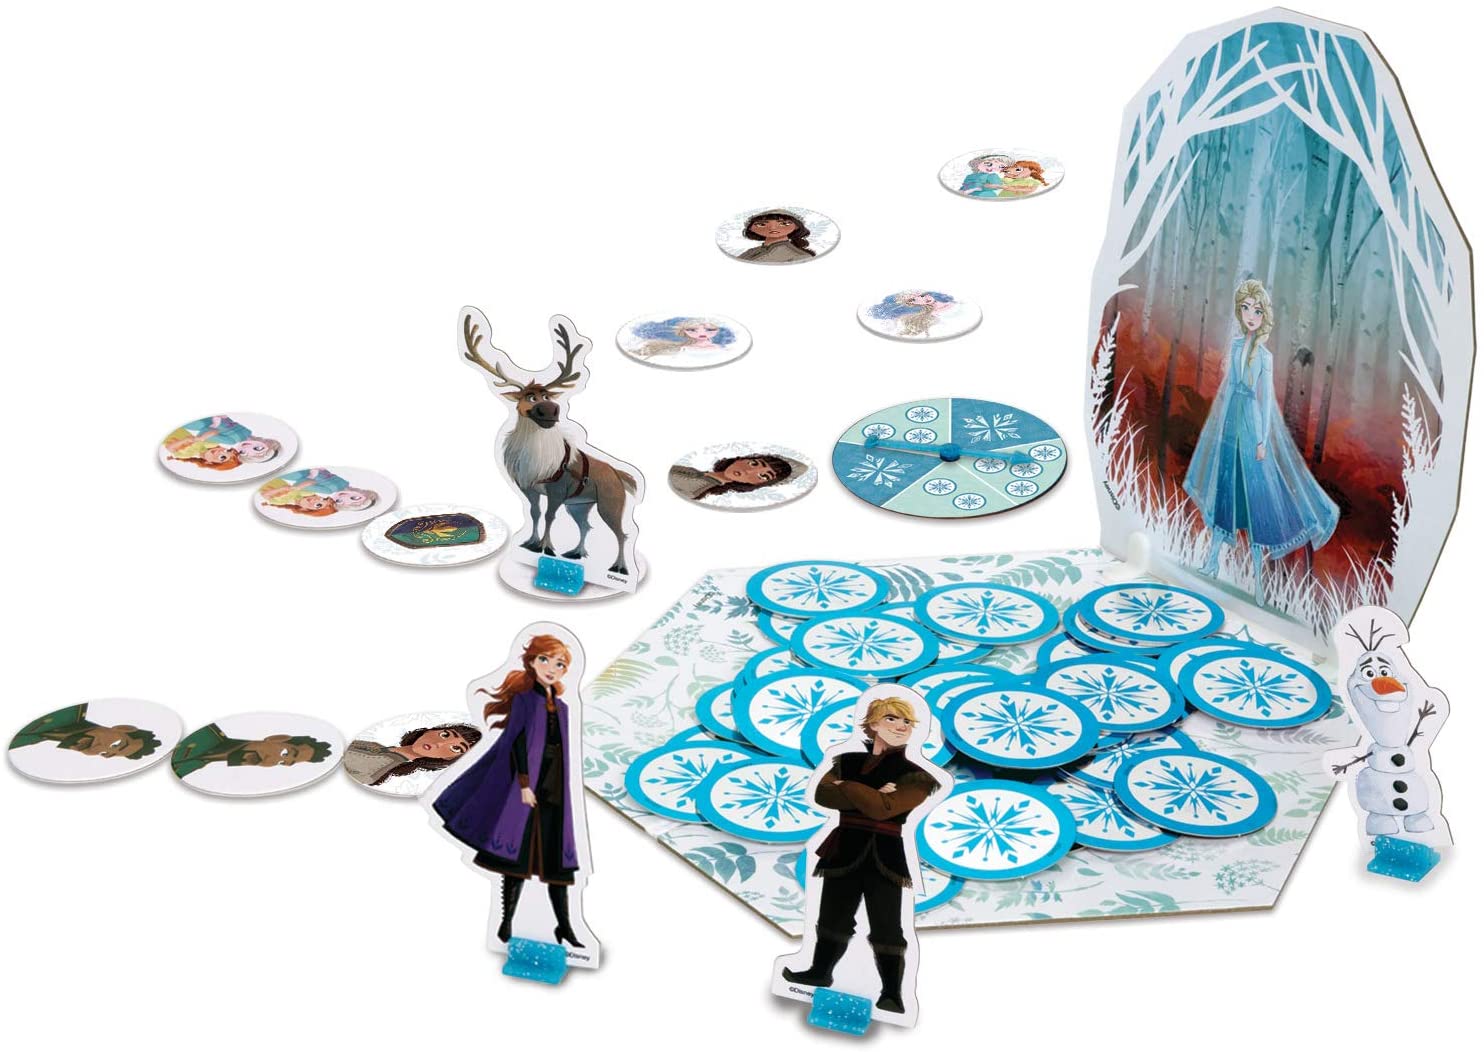 Disney Frozen 2 Snowflake Journey Game - English Version